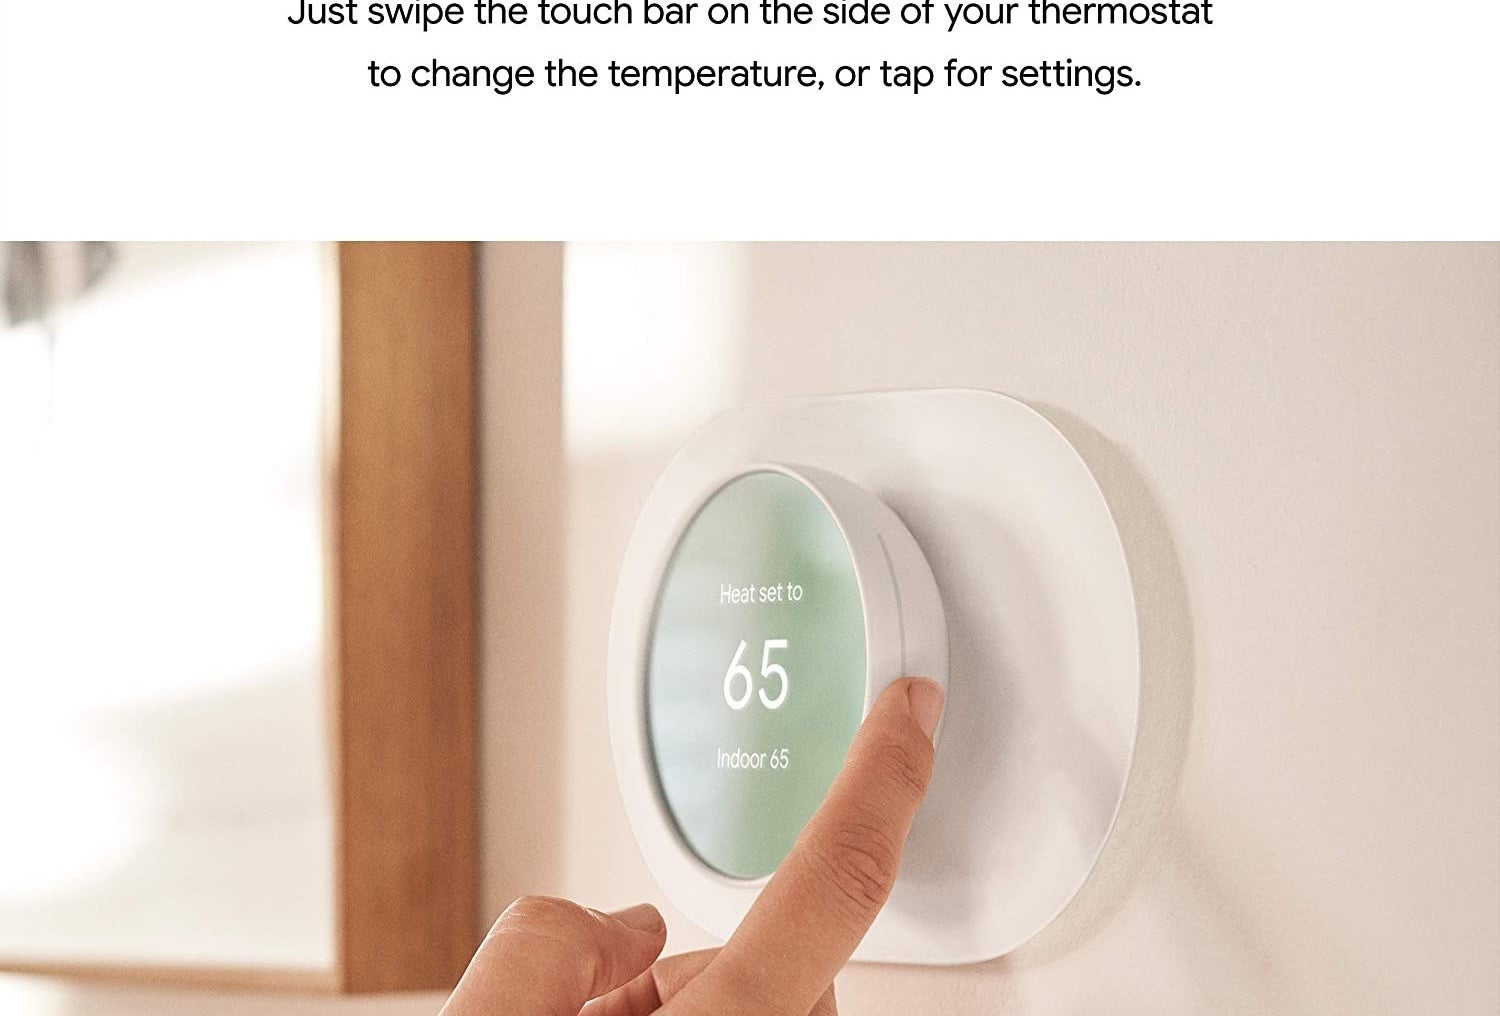 Model adjusting temperature on Google Nest thermometer